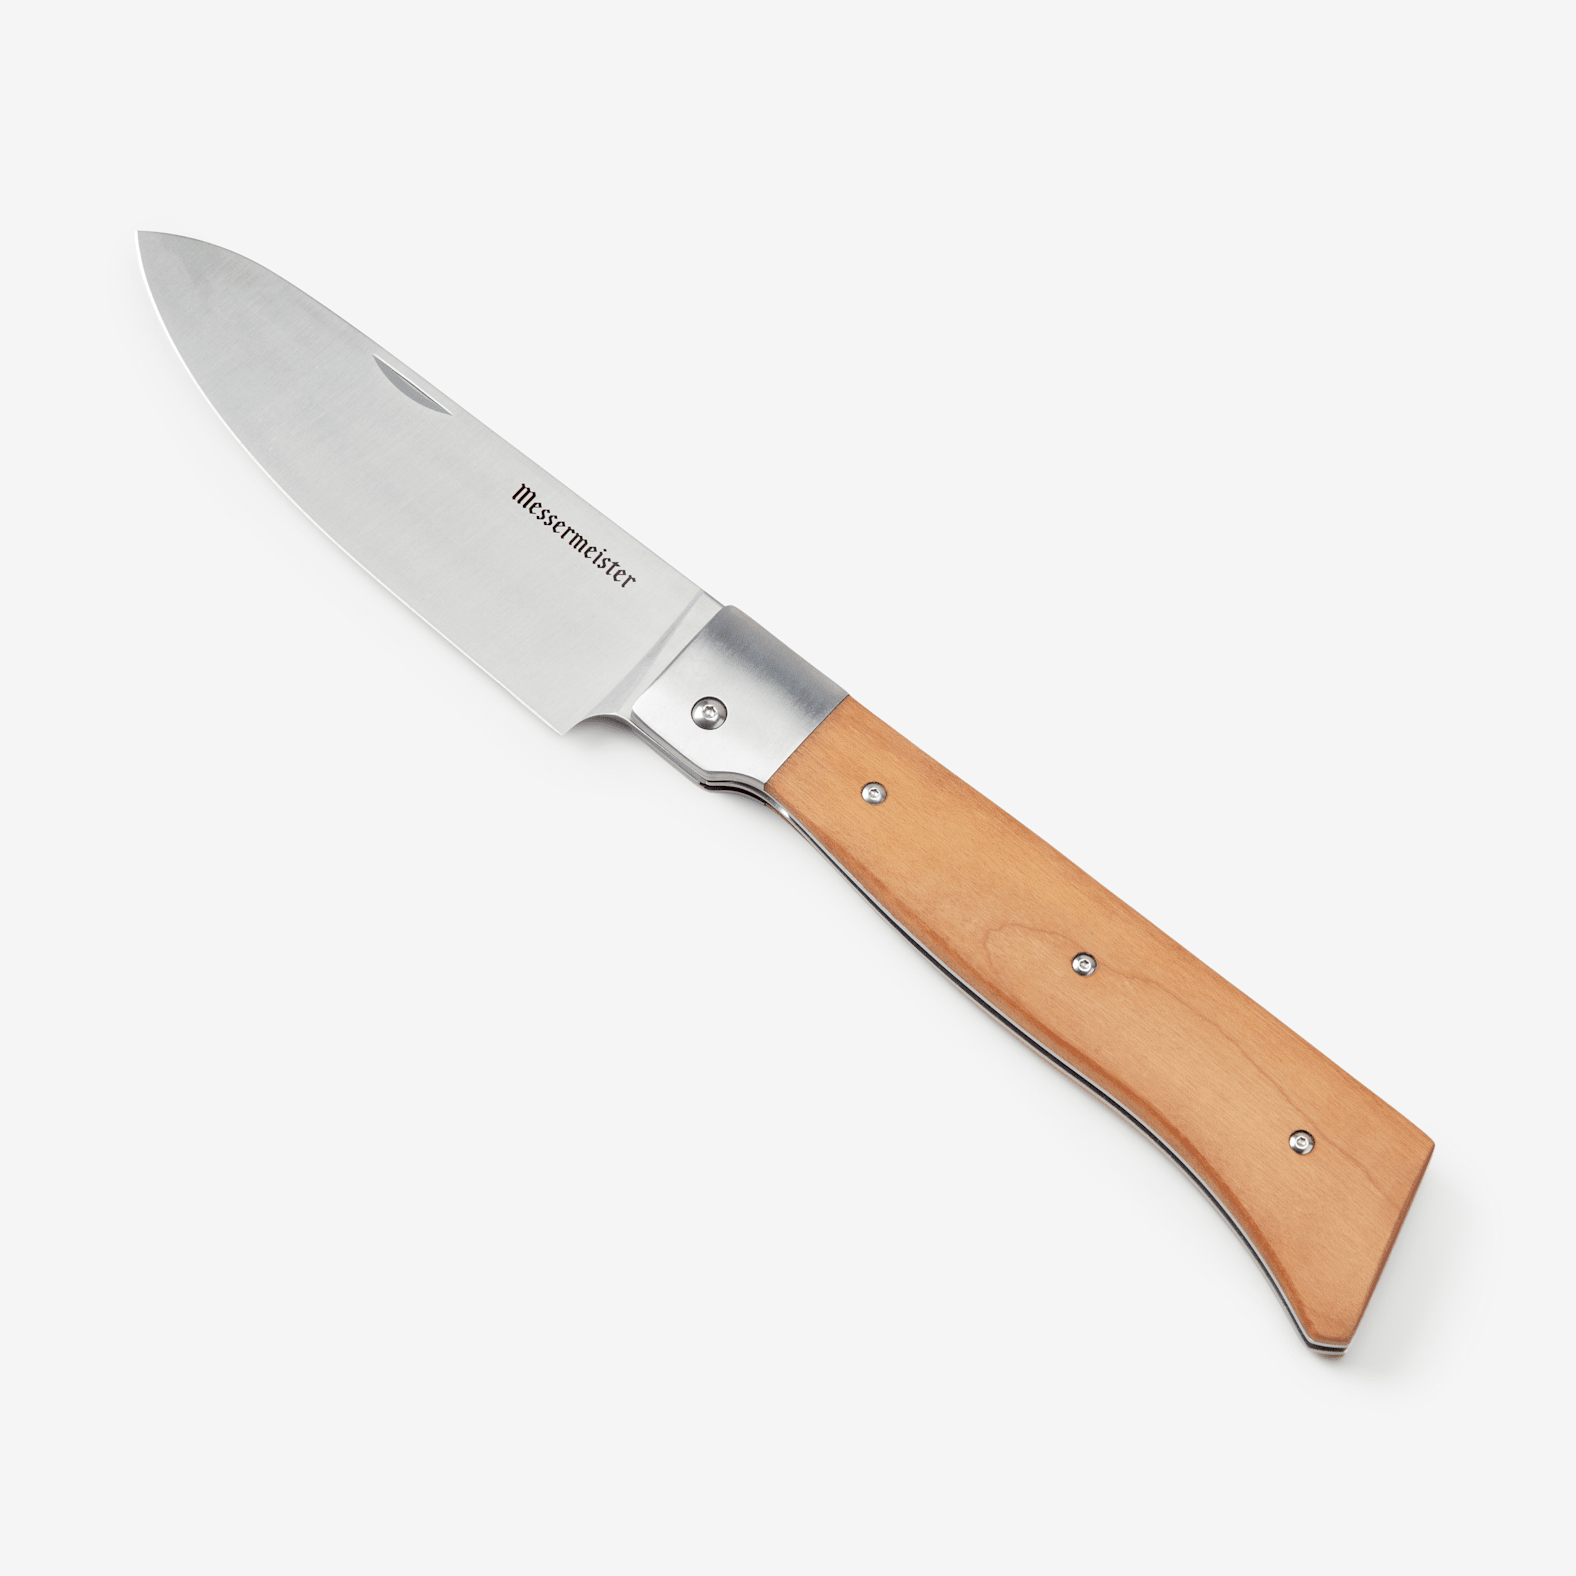 Adventure Chef's Portable Compact Pocket Knife Sharpener